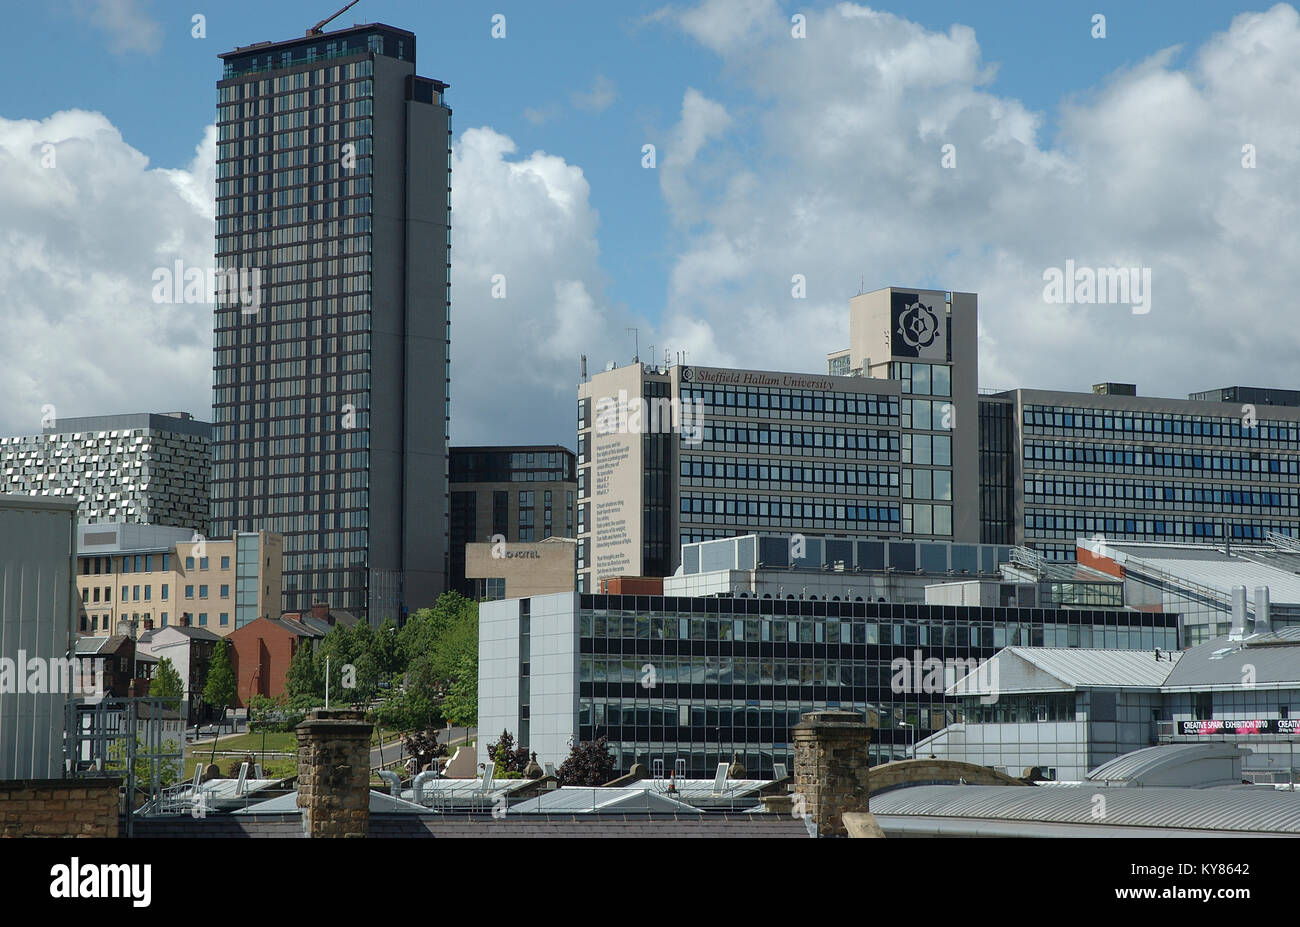 Las alturas de la torre, la Torre de San Pablo; Sheffield Hallam University; Sheffield, South Yorkshire, Inglaterra, Reino Unido. Reino Unido; Europa. Foto de stock